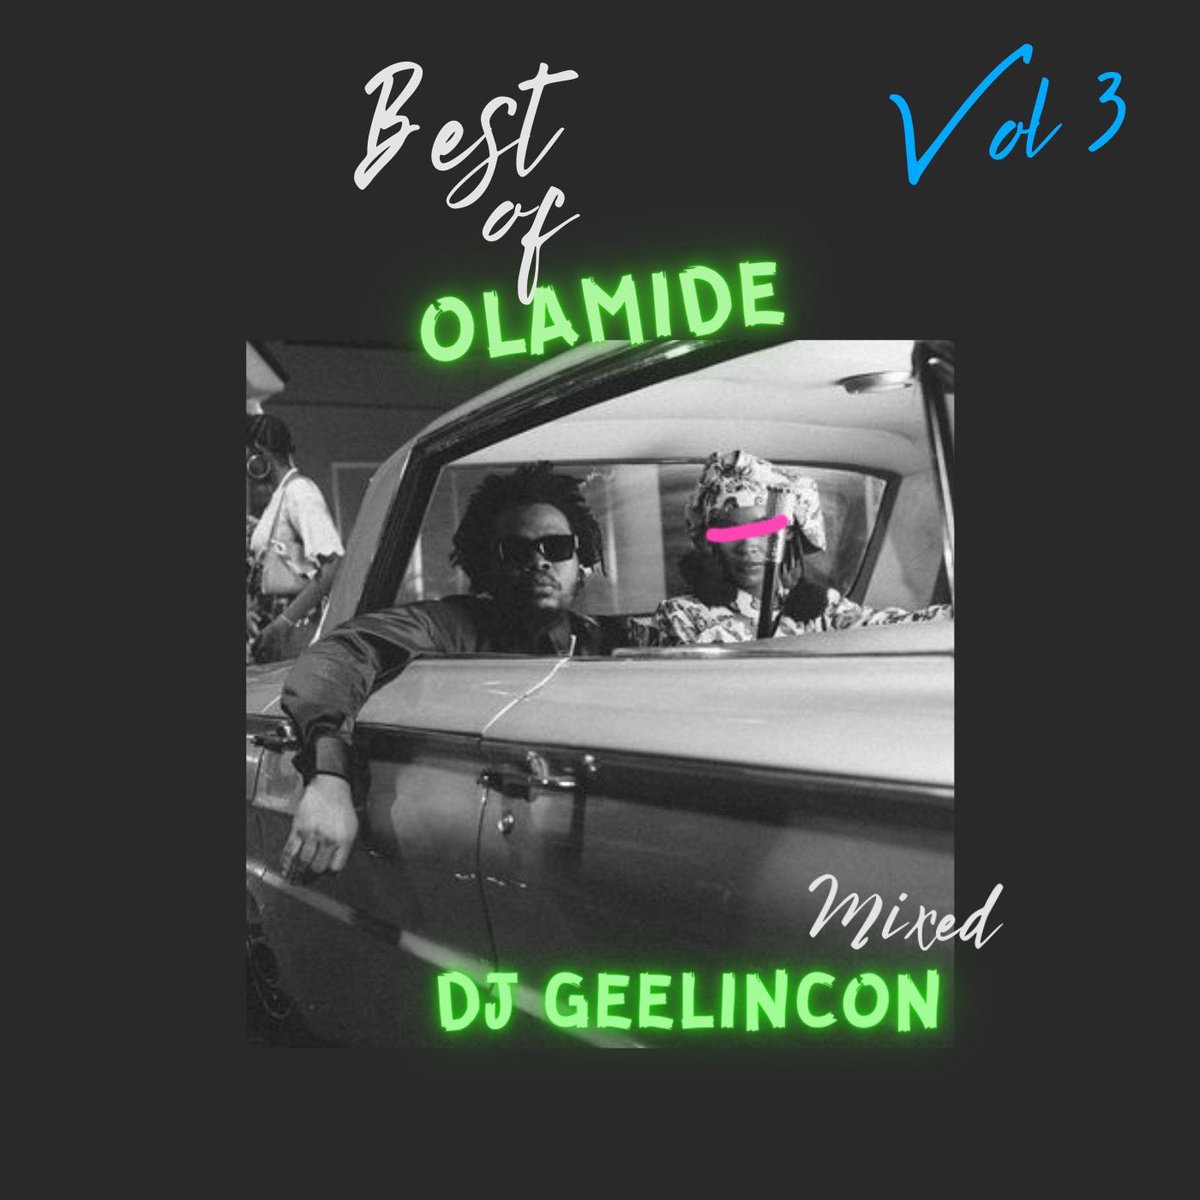 DJ GEELINCON BEST OF OLAMIDE VOL 3 youtu.be/mB96FfUSM14 via @YouTube